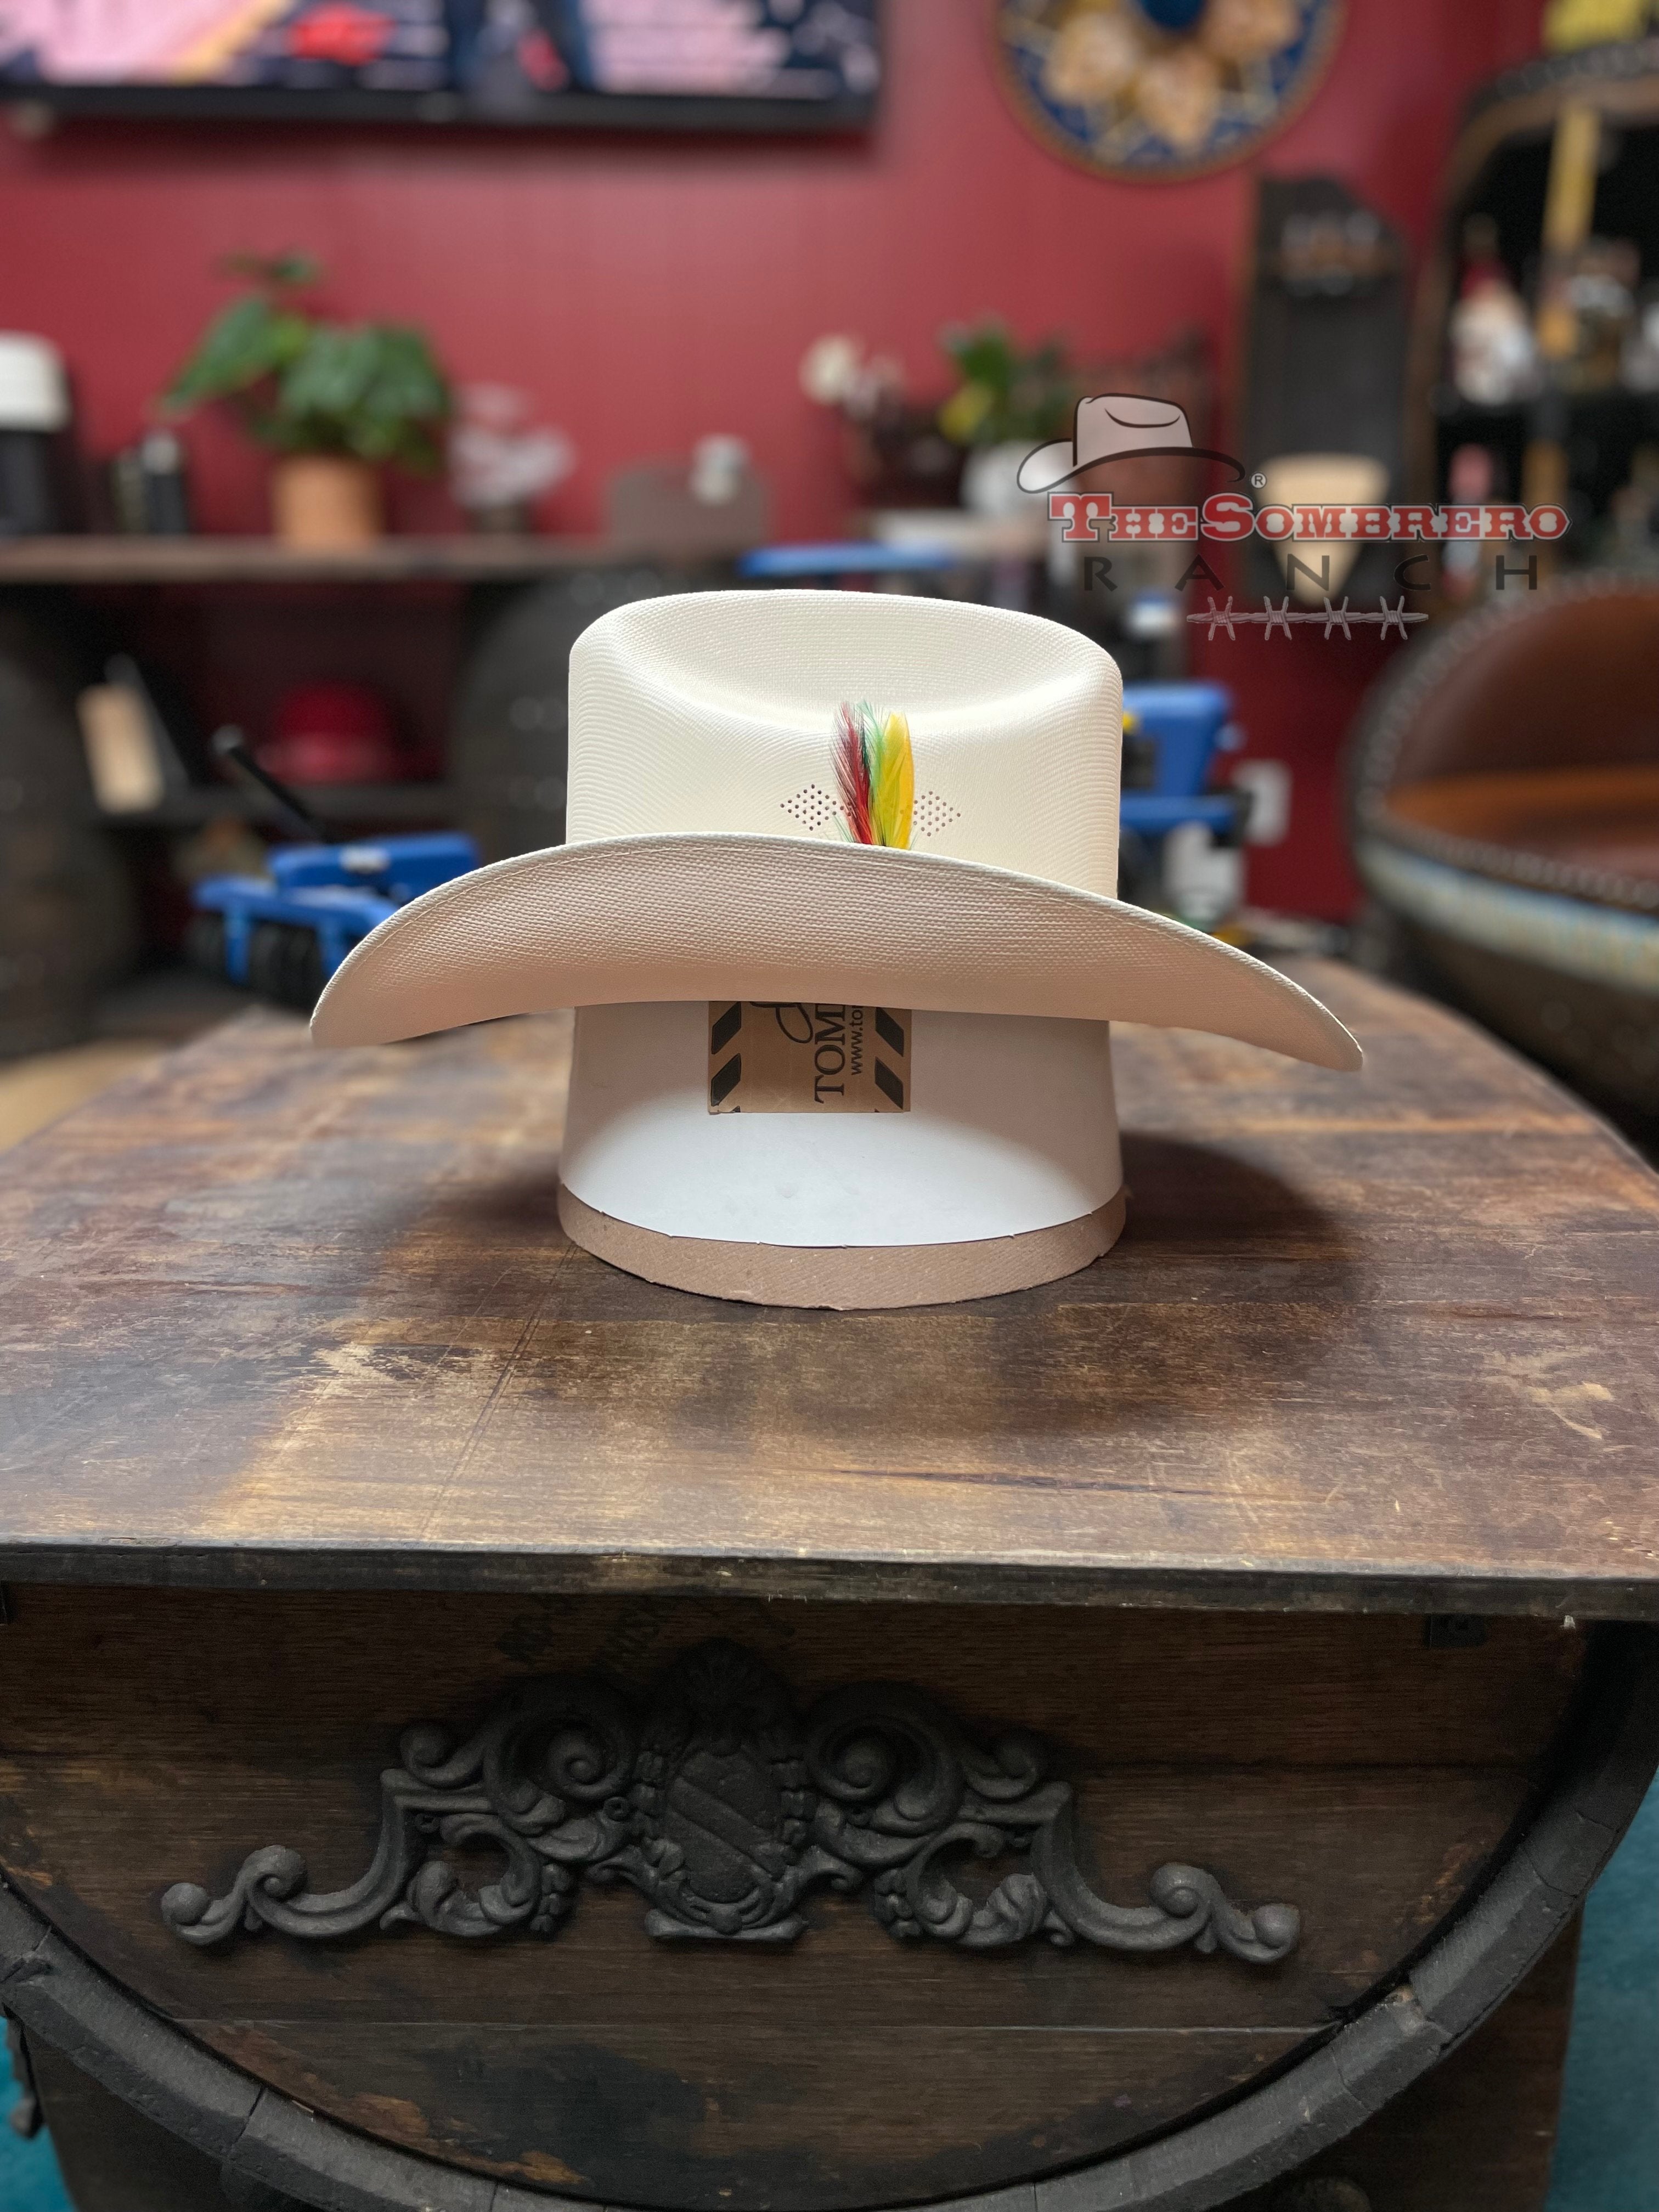 Rancher 1,000x Cowboy Hat